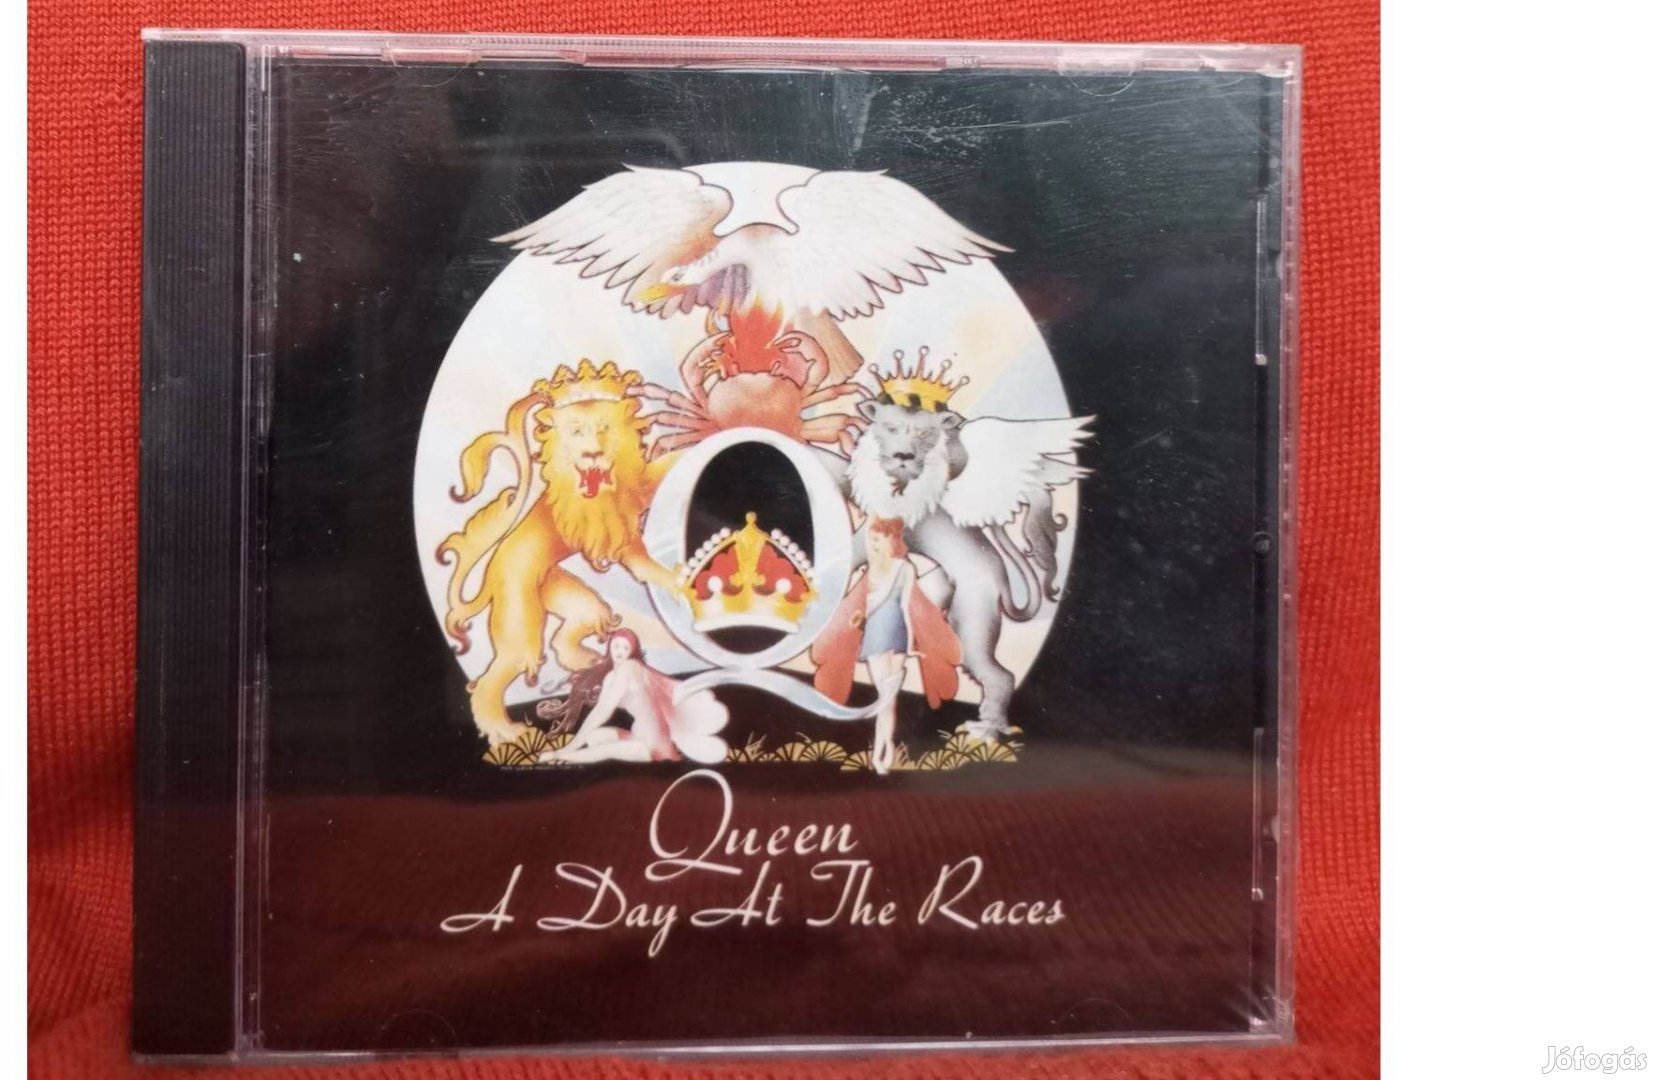 Queen - A Day At The Races CD. /új,fóliás/ 1993